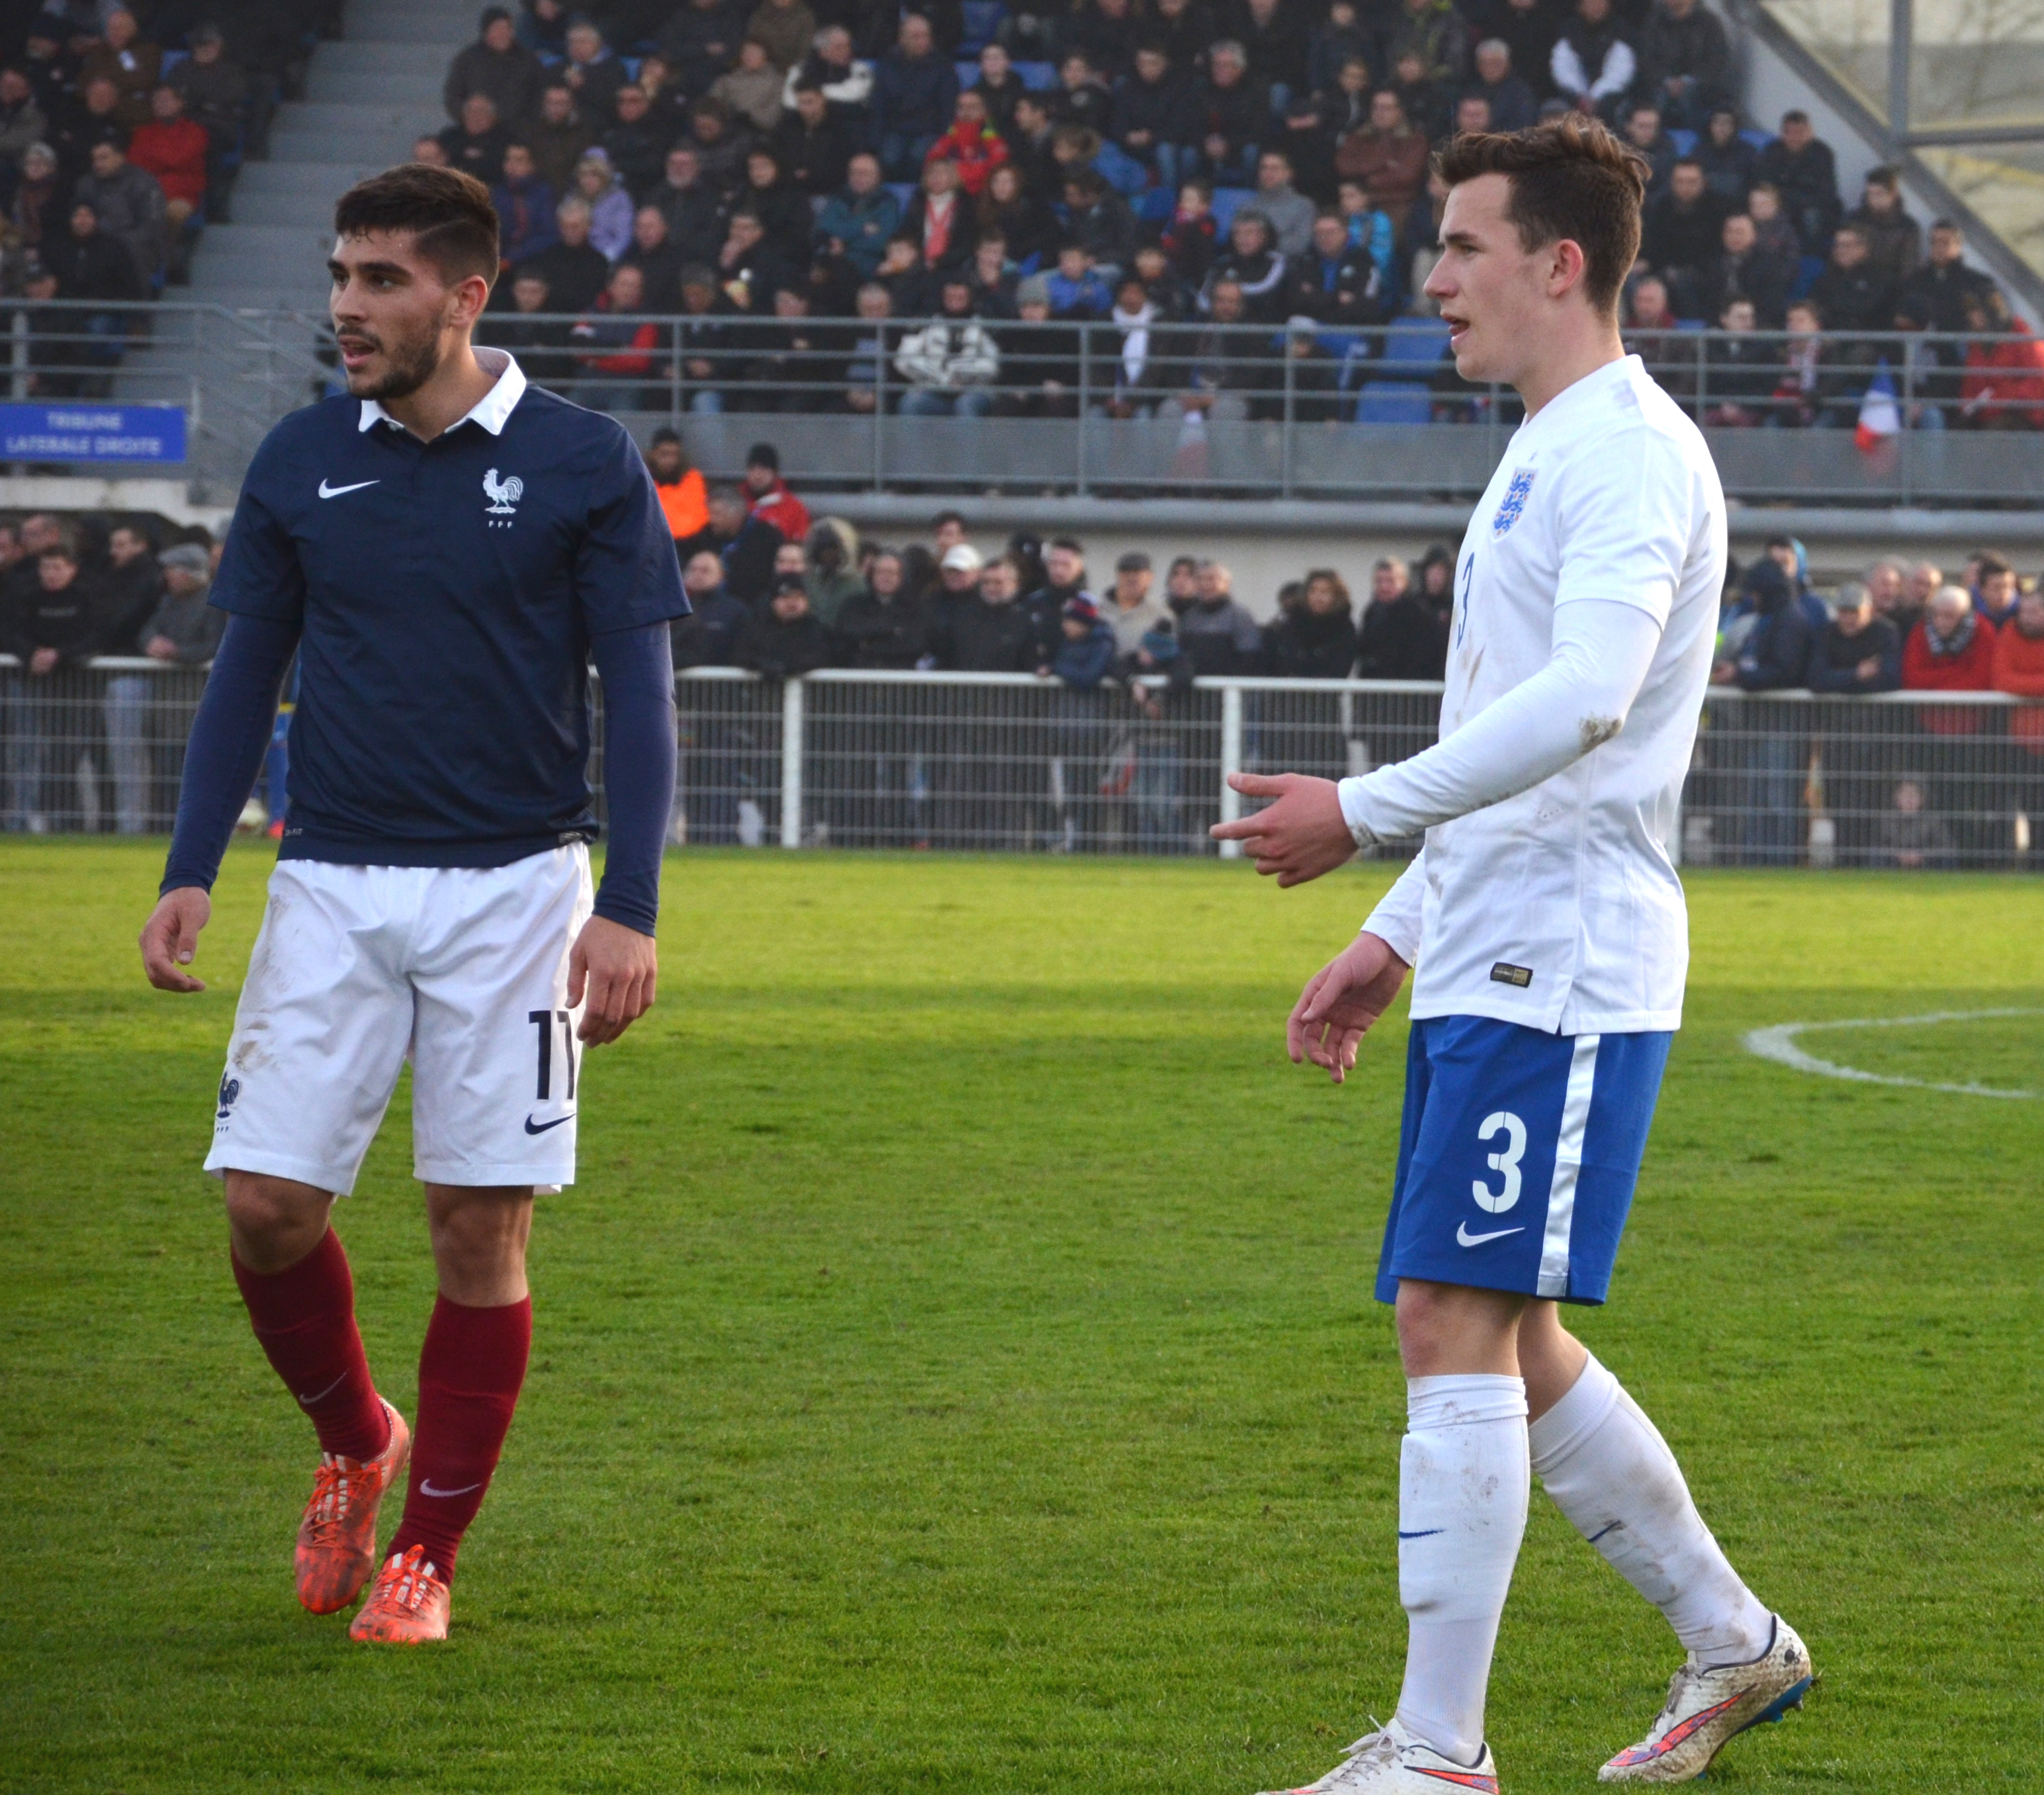 File:France - England U19, 20150331 62.JPG - Wikimedia Commons